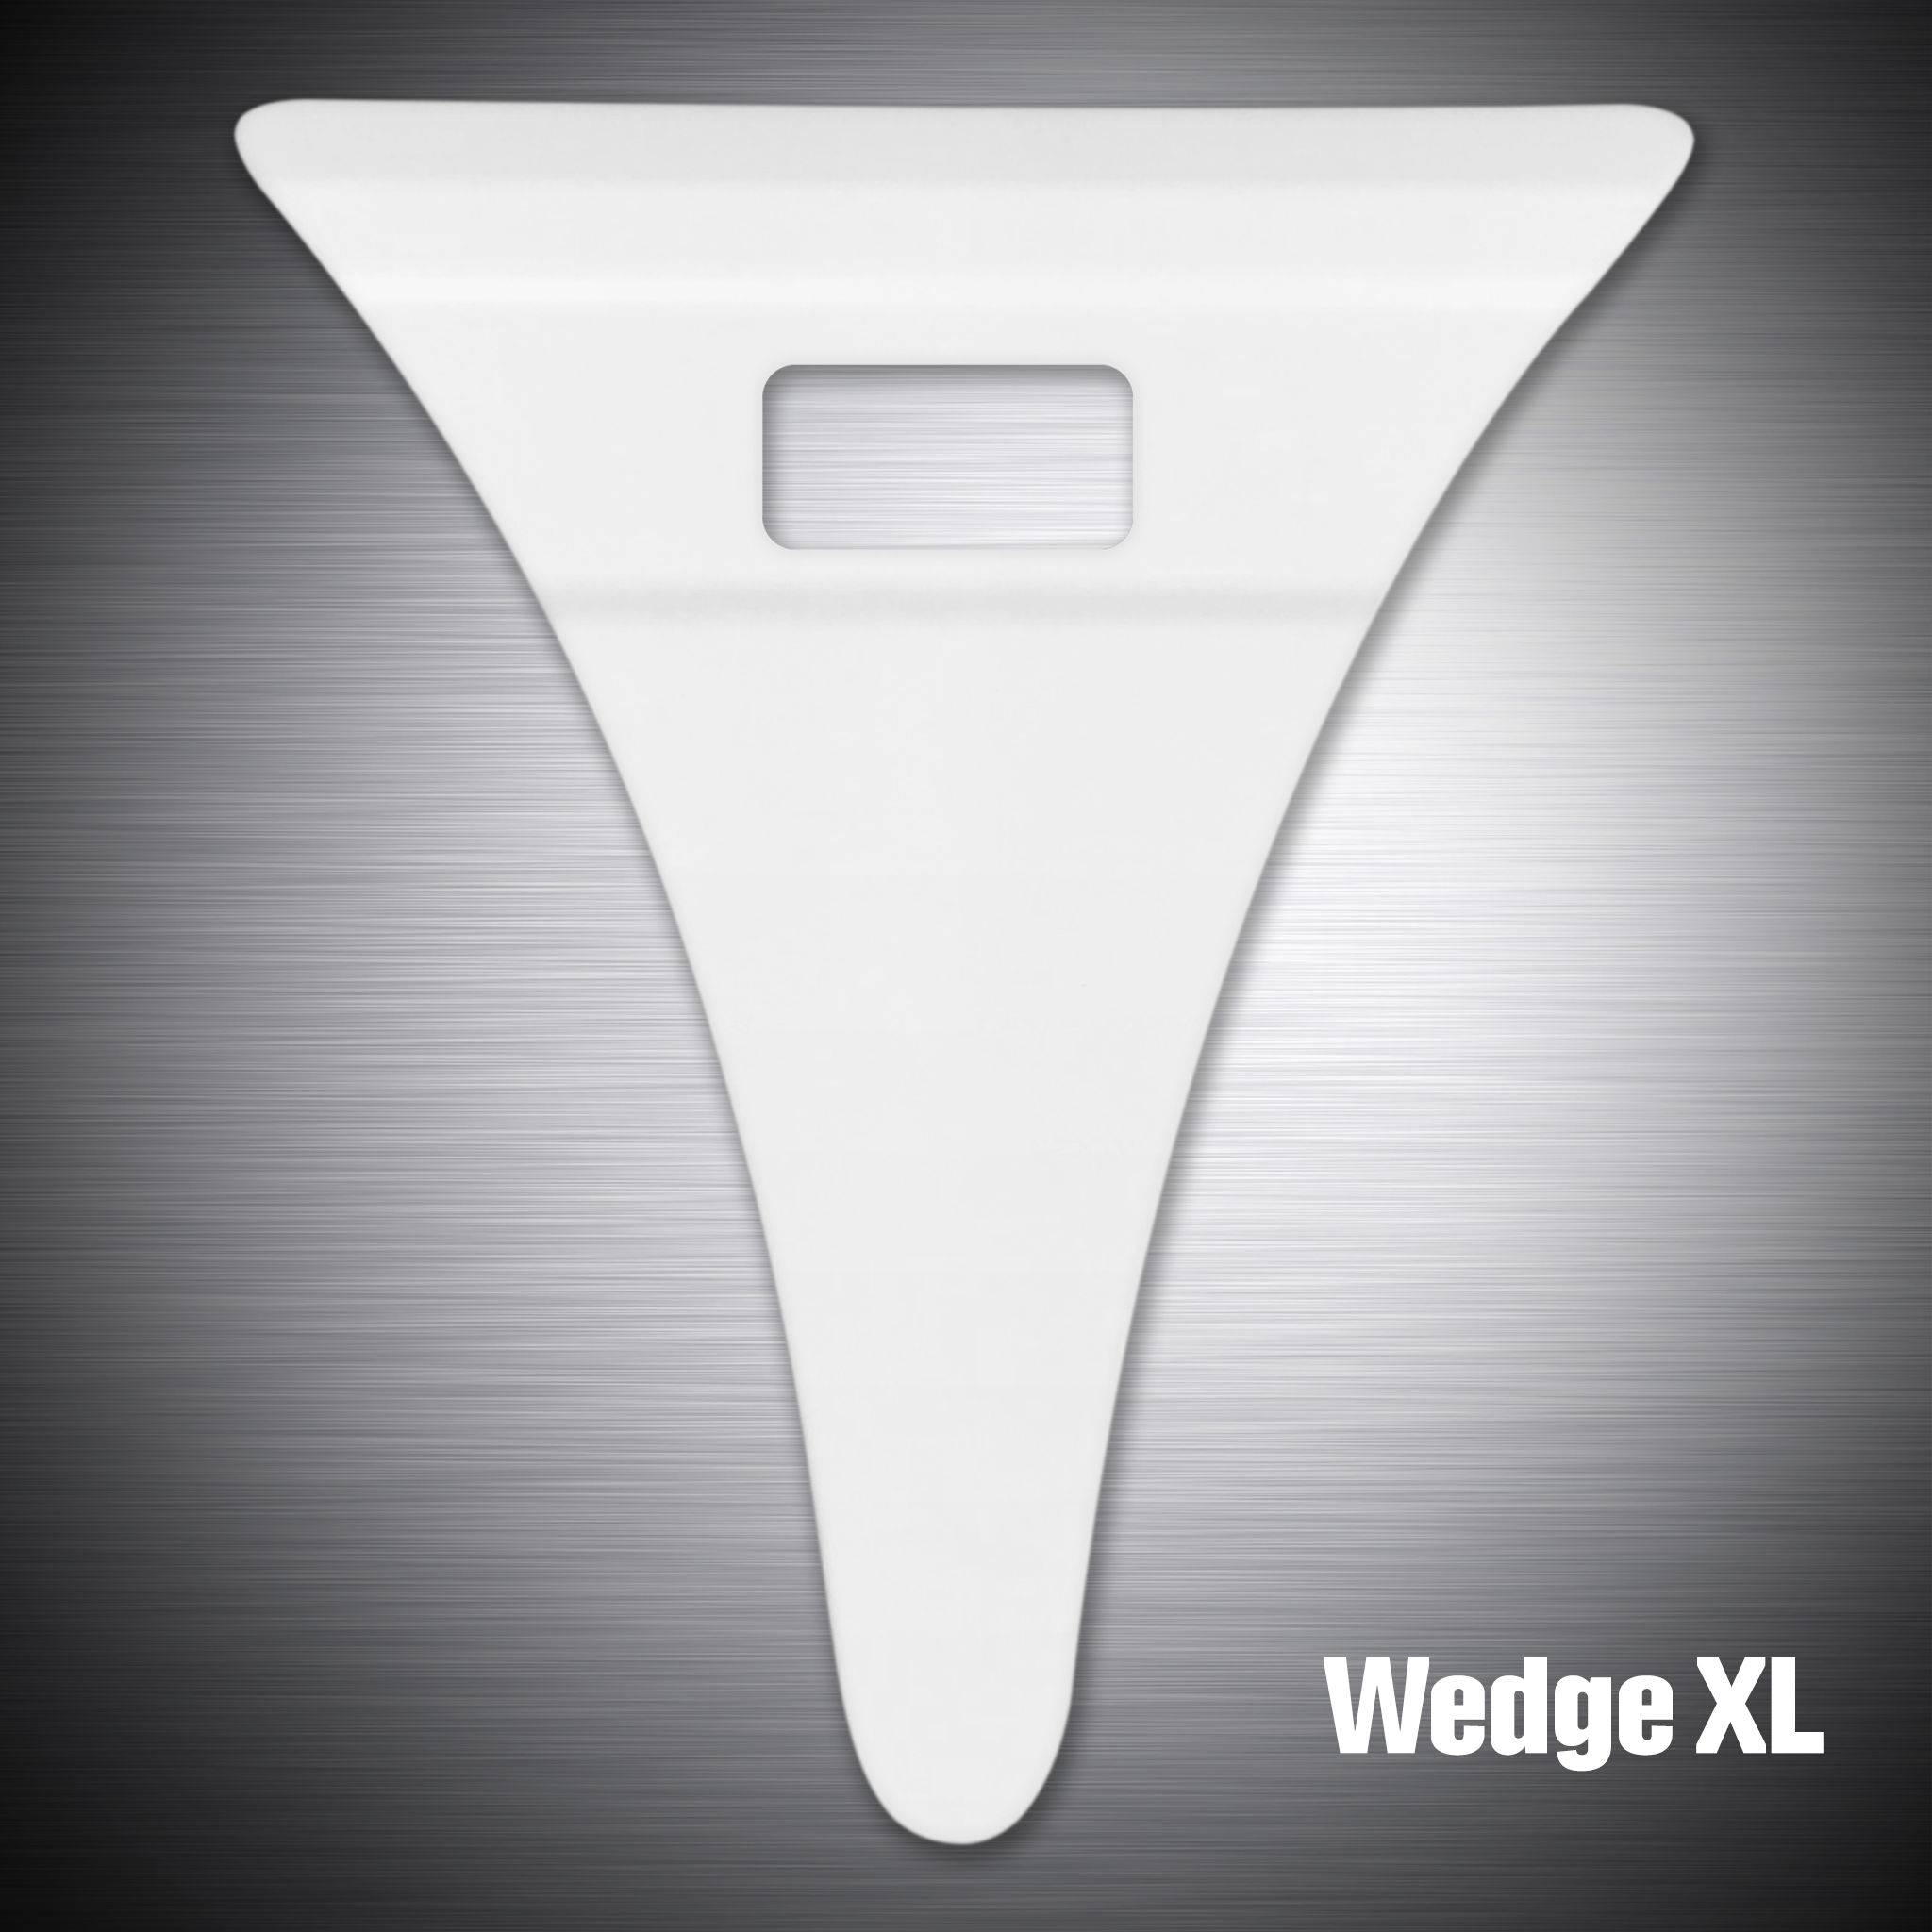 Wedge XL prepared for - Original side marking light